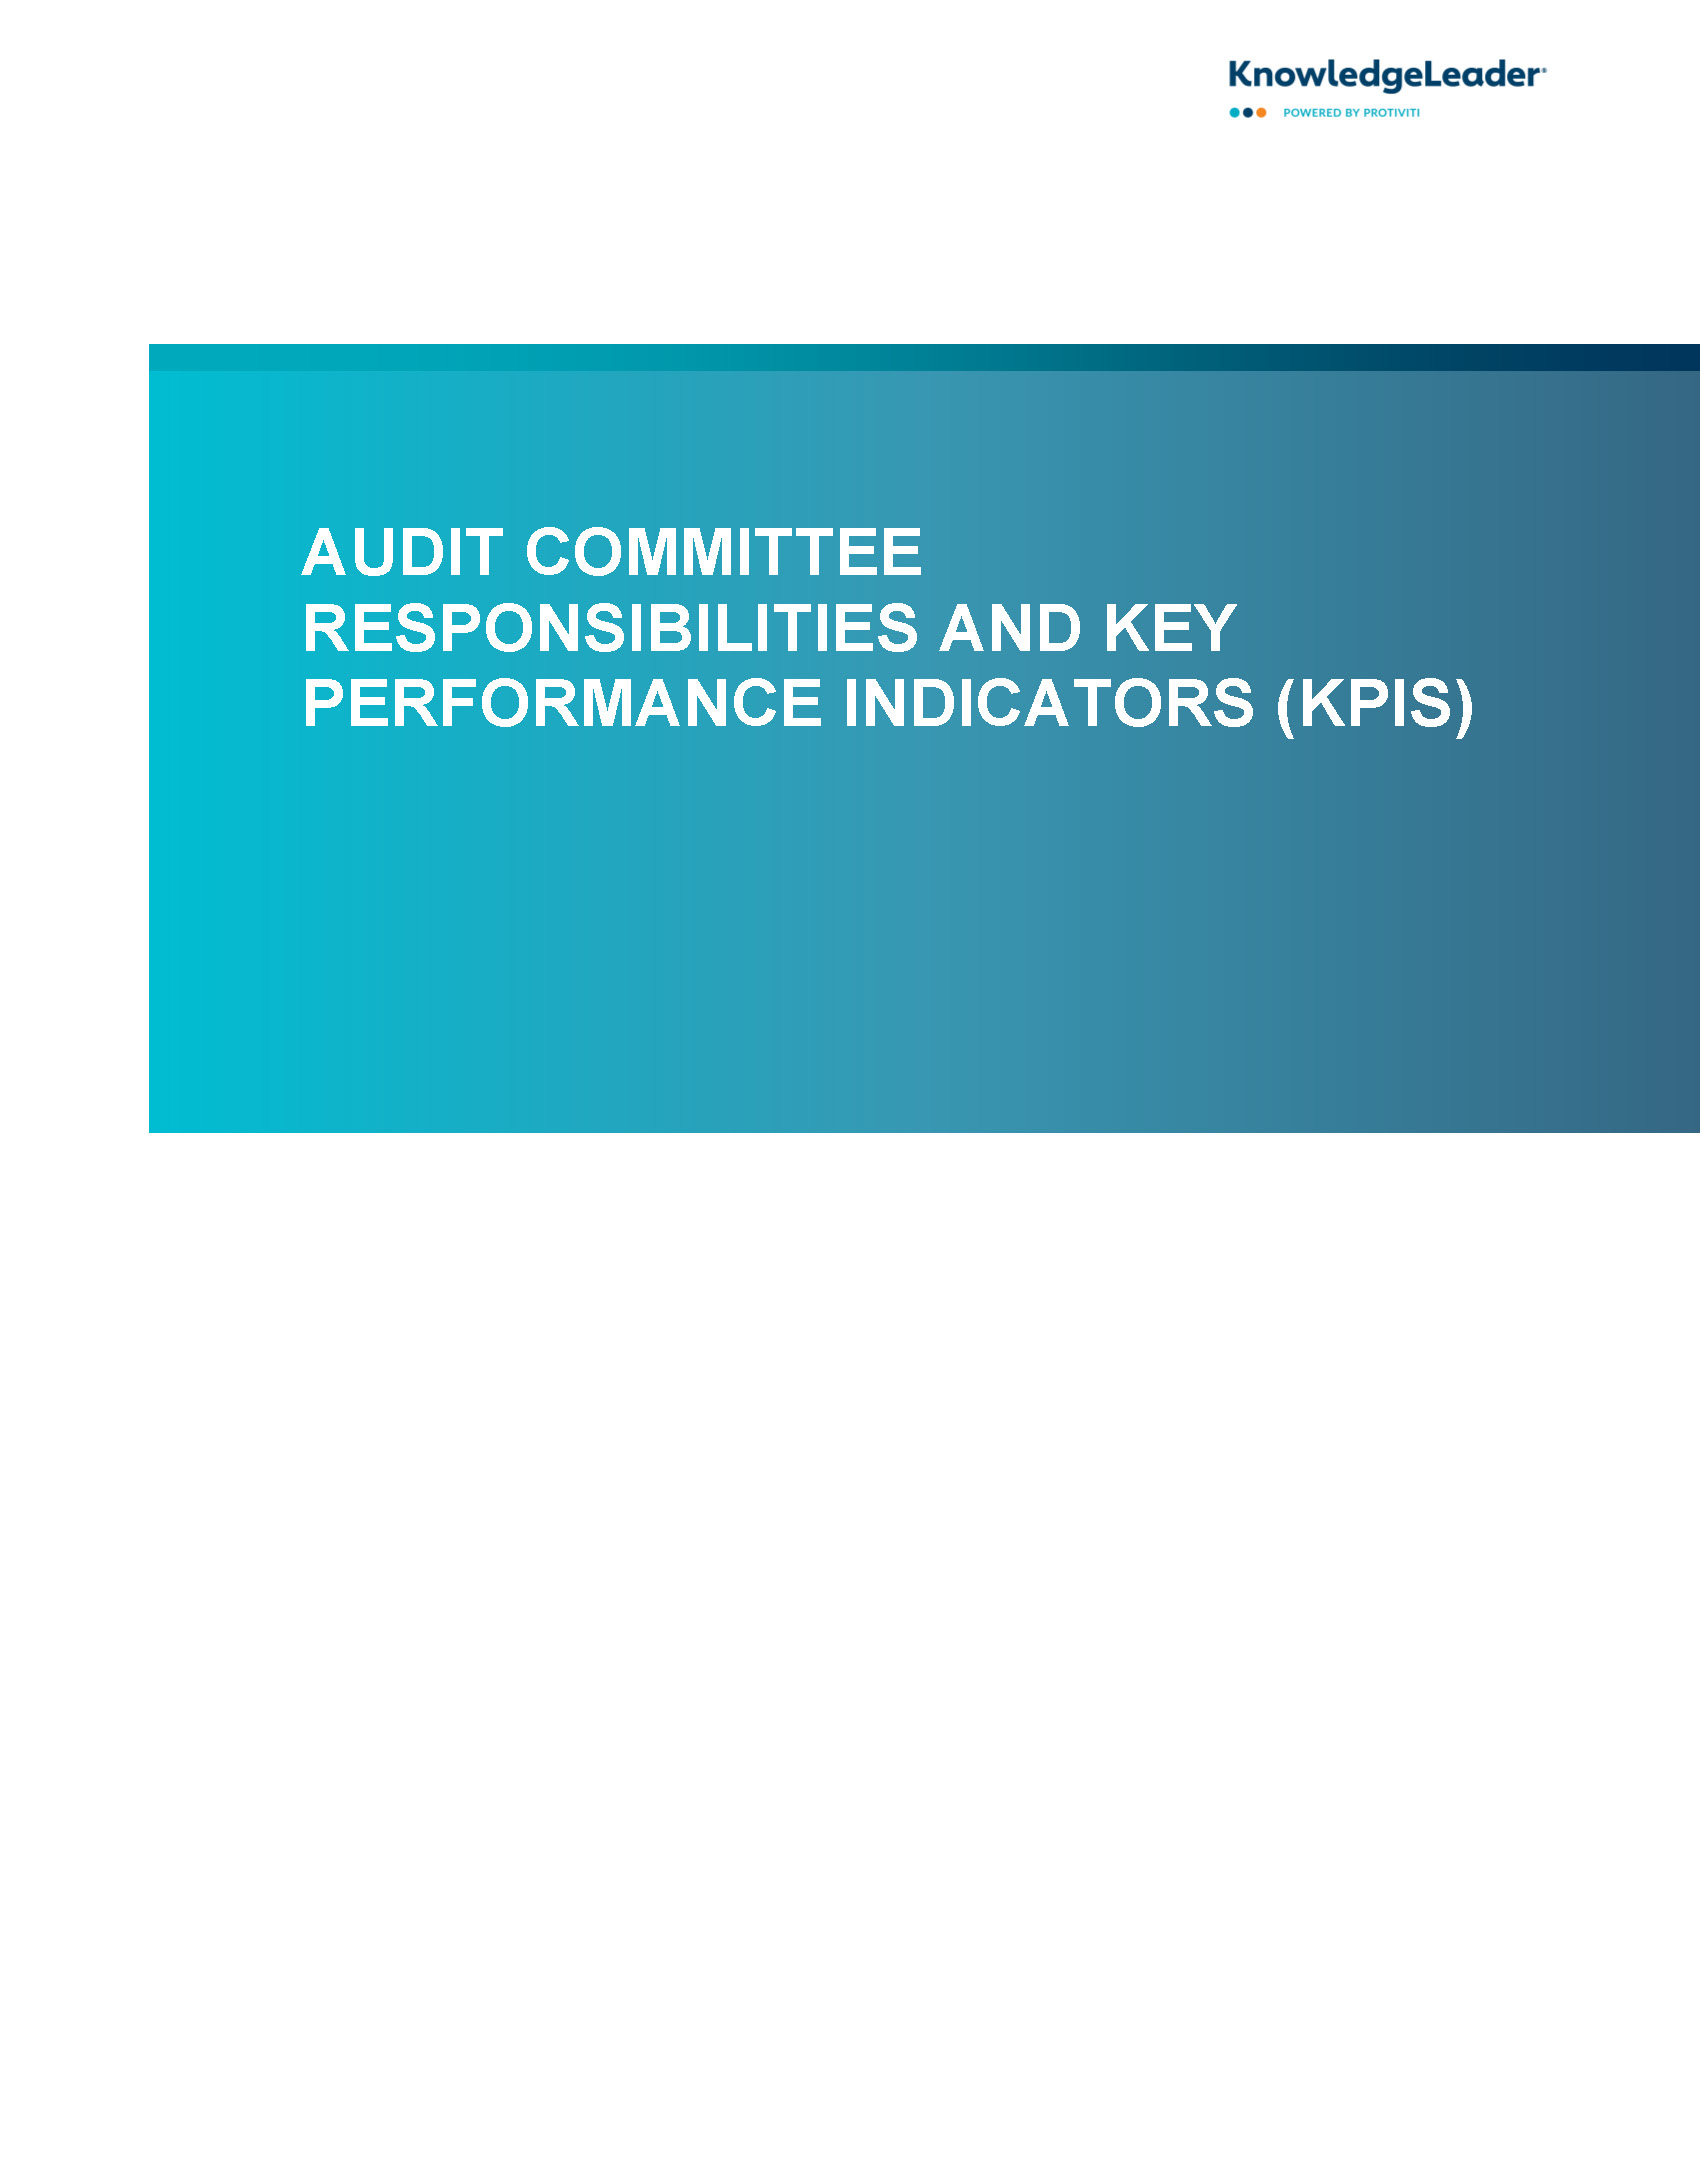 Audit Committee Responsibilities and Key Performance Indicators (KPIs)